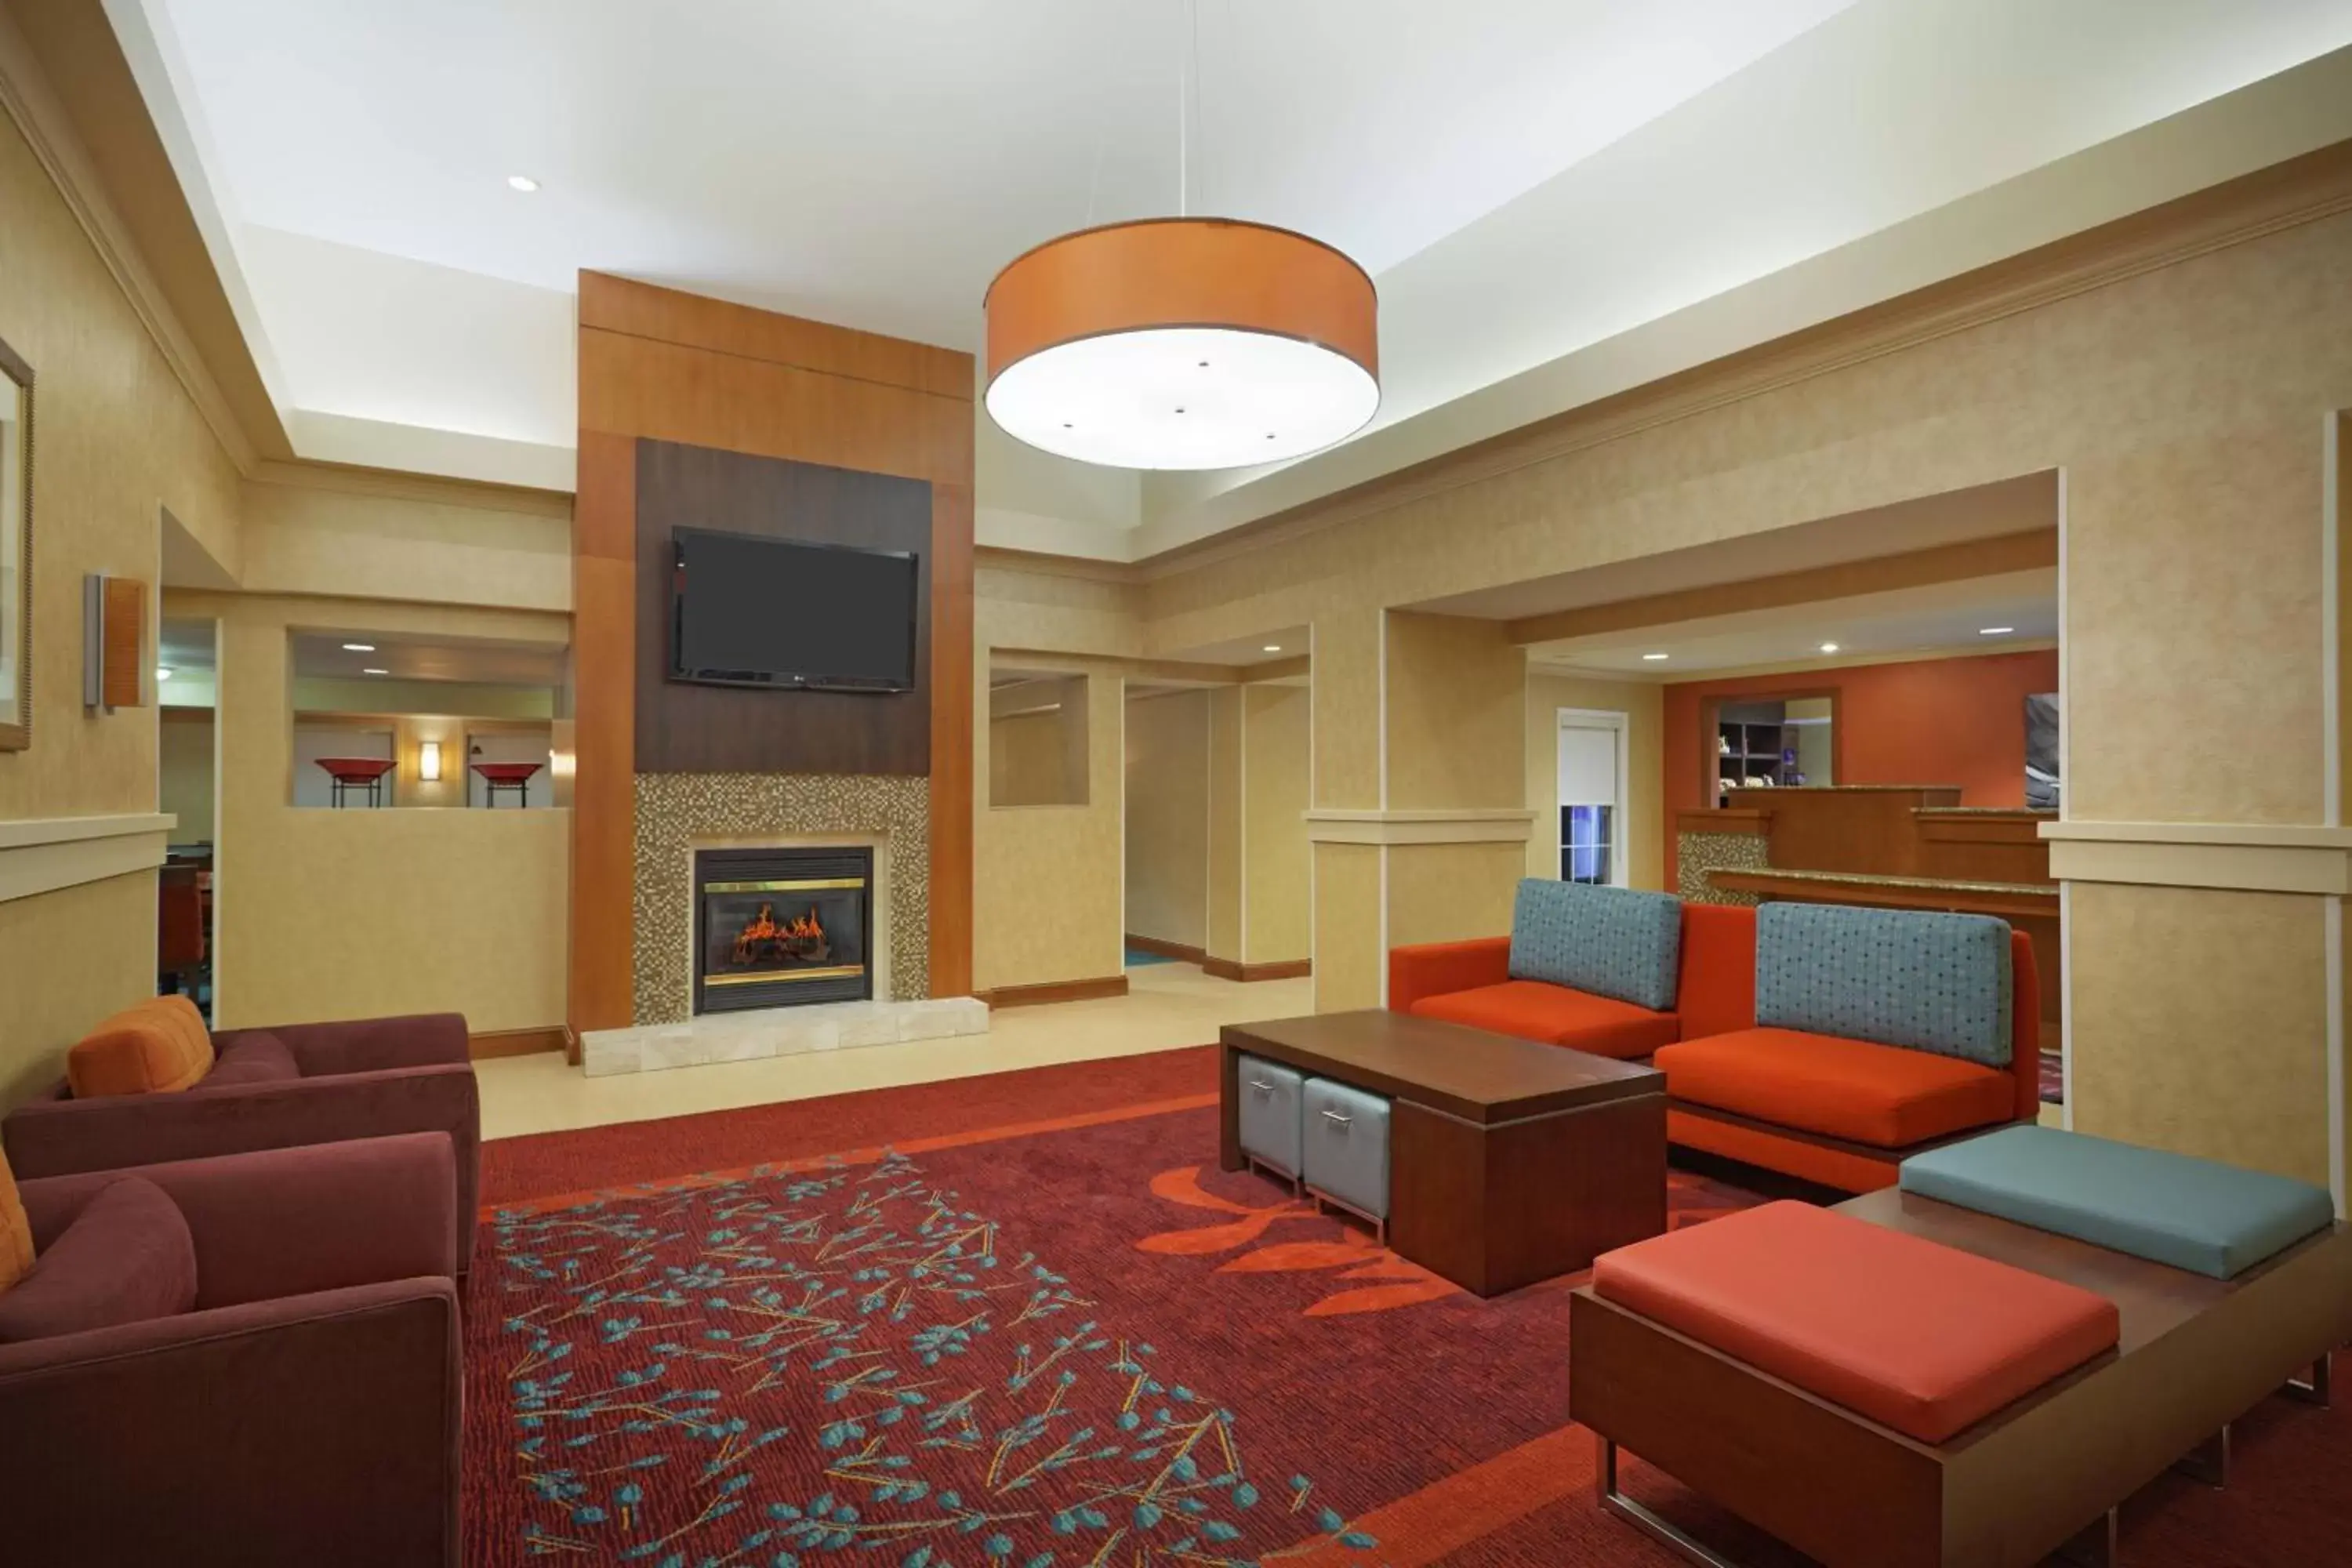 Lobby or reception, Lobby/Reception in Residence Inn Houston by The Galleria